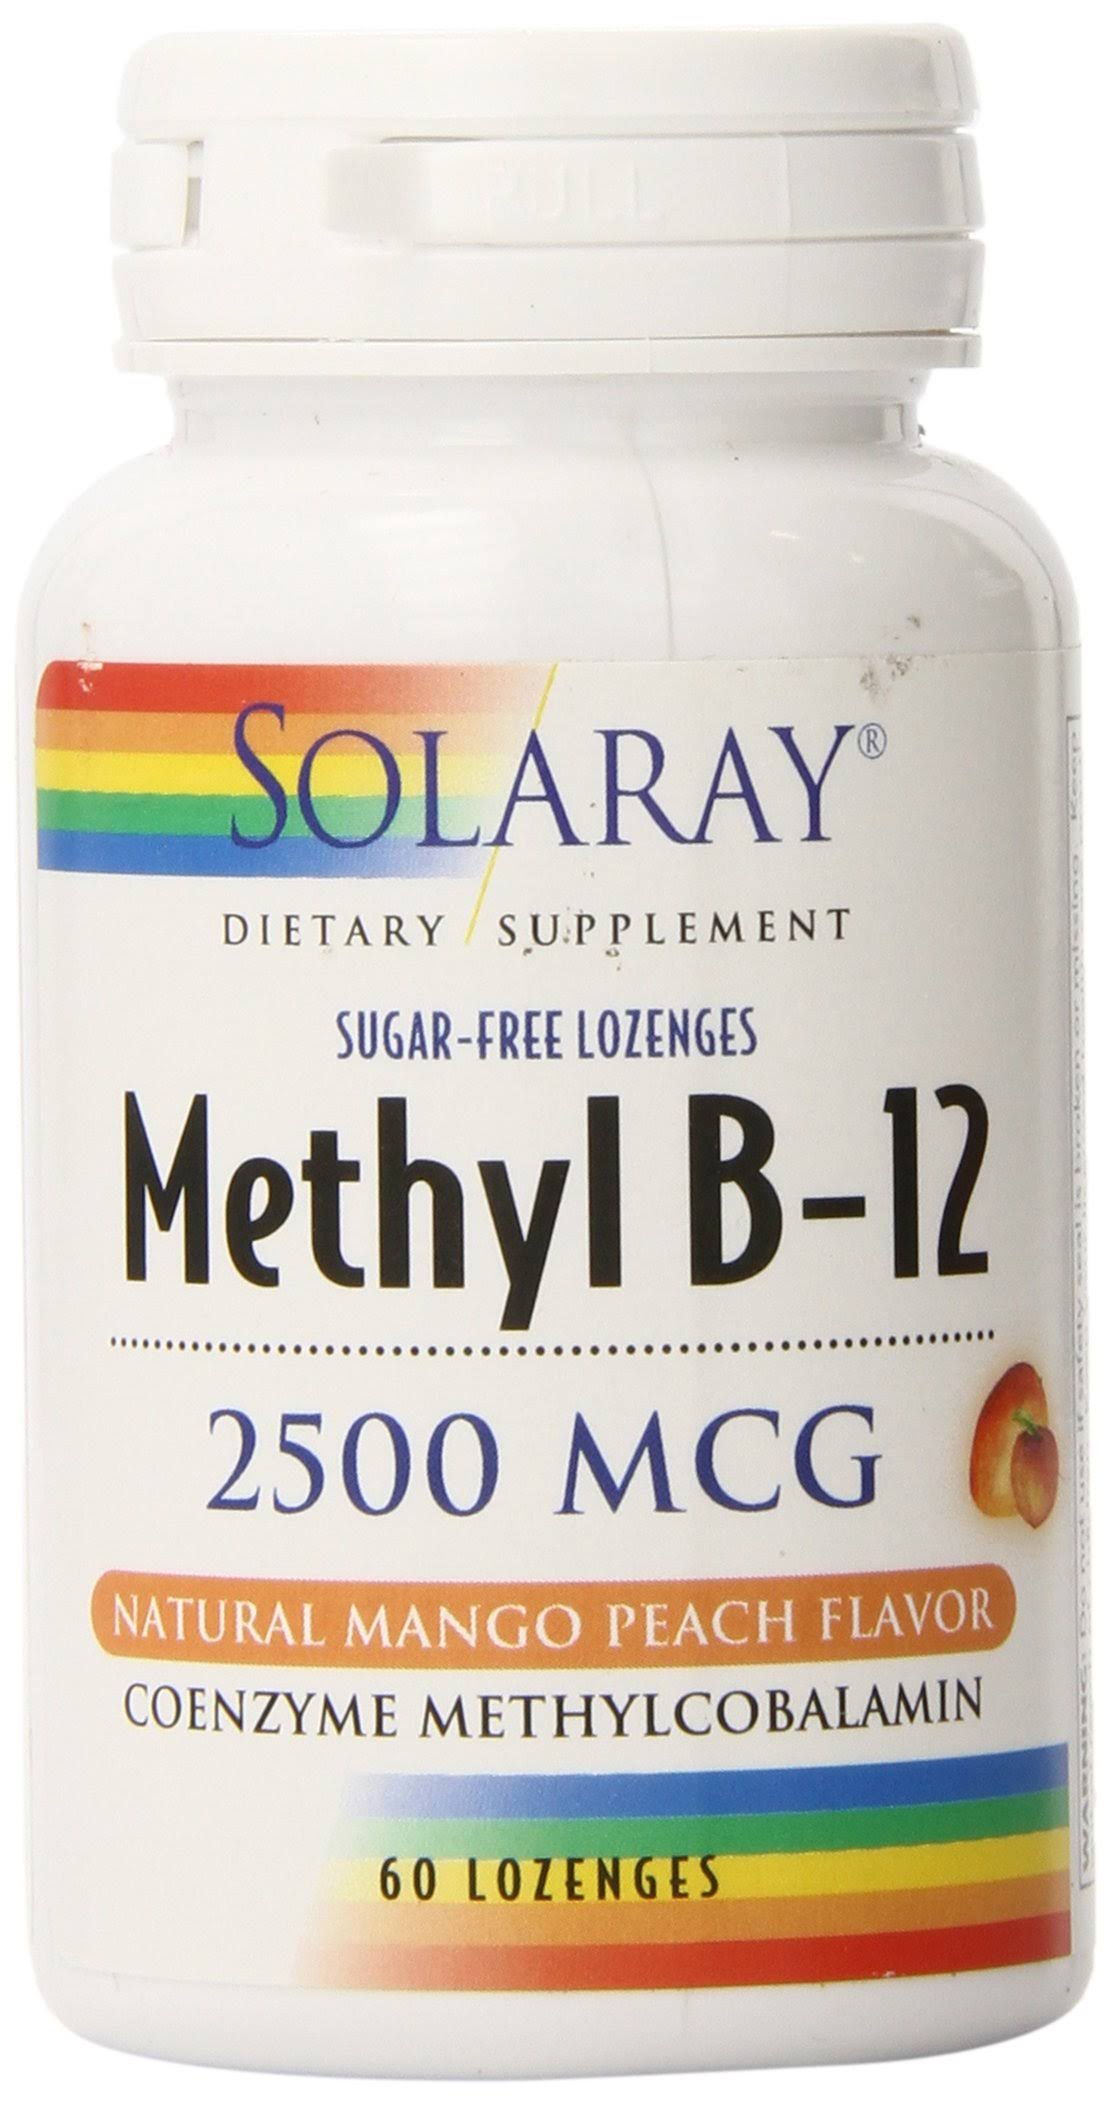 Solaray Methyl B-12 Lozenges - Mango Peach, x60